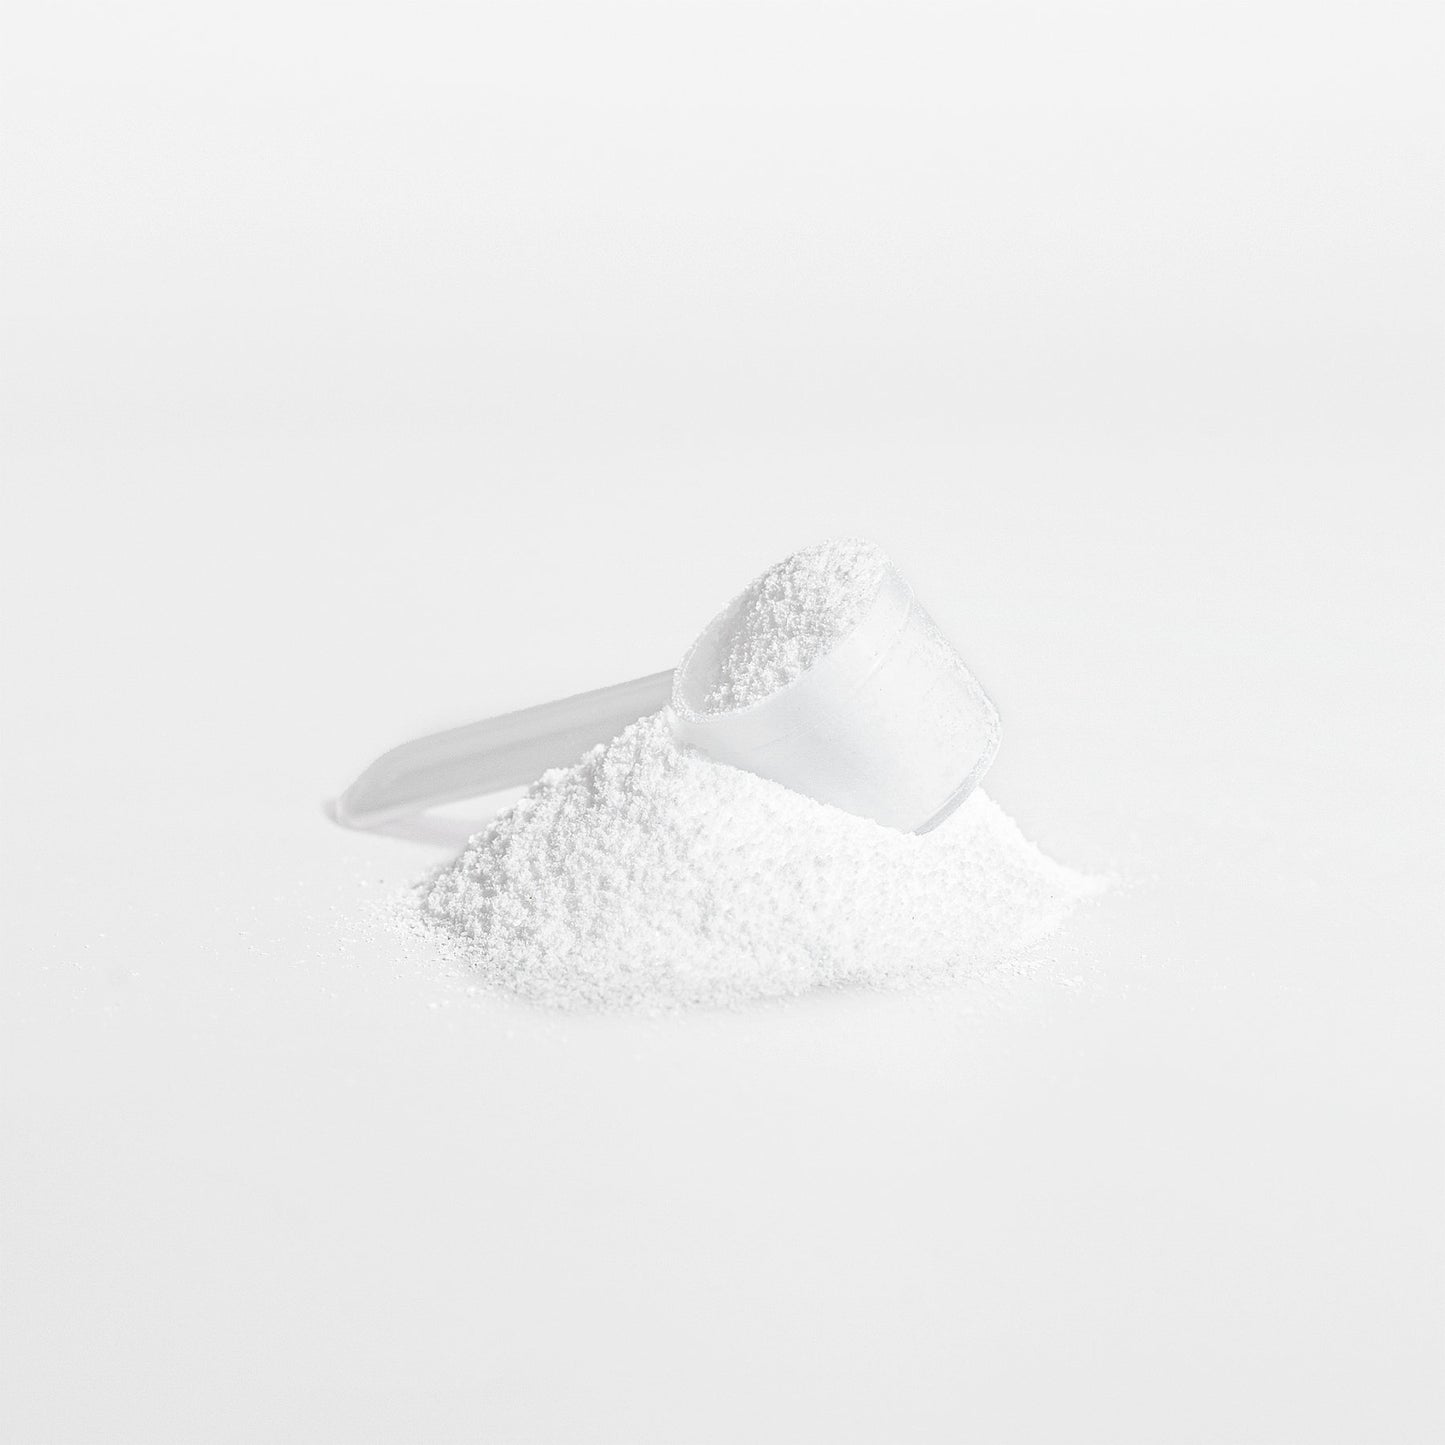 Peak Performance Creatine Monohydrate Powder - Pure Micronized Formula (250g)